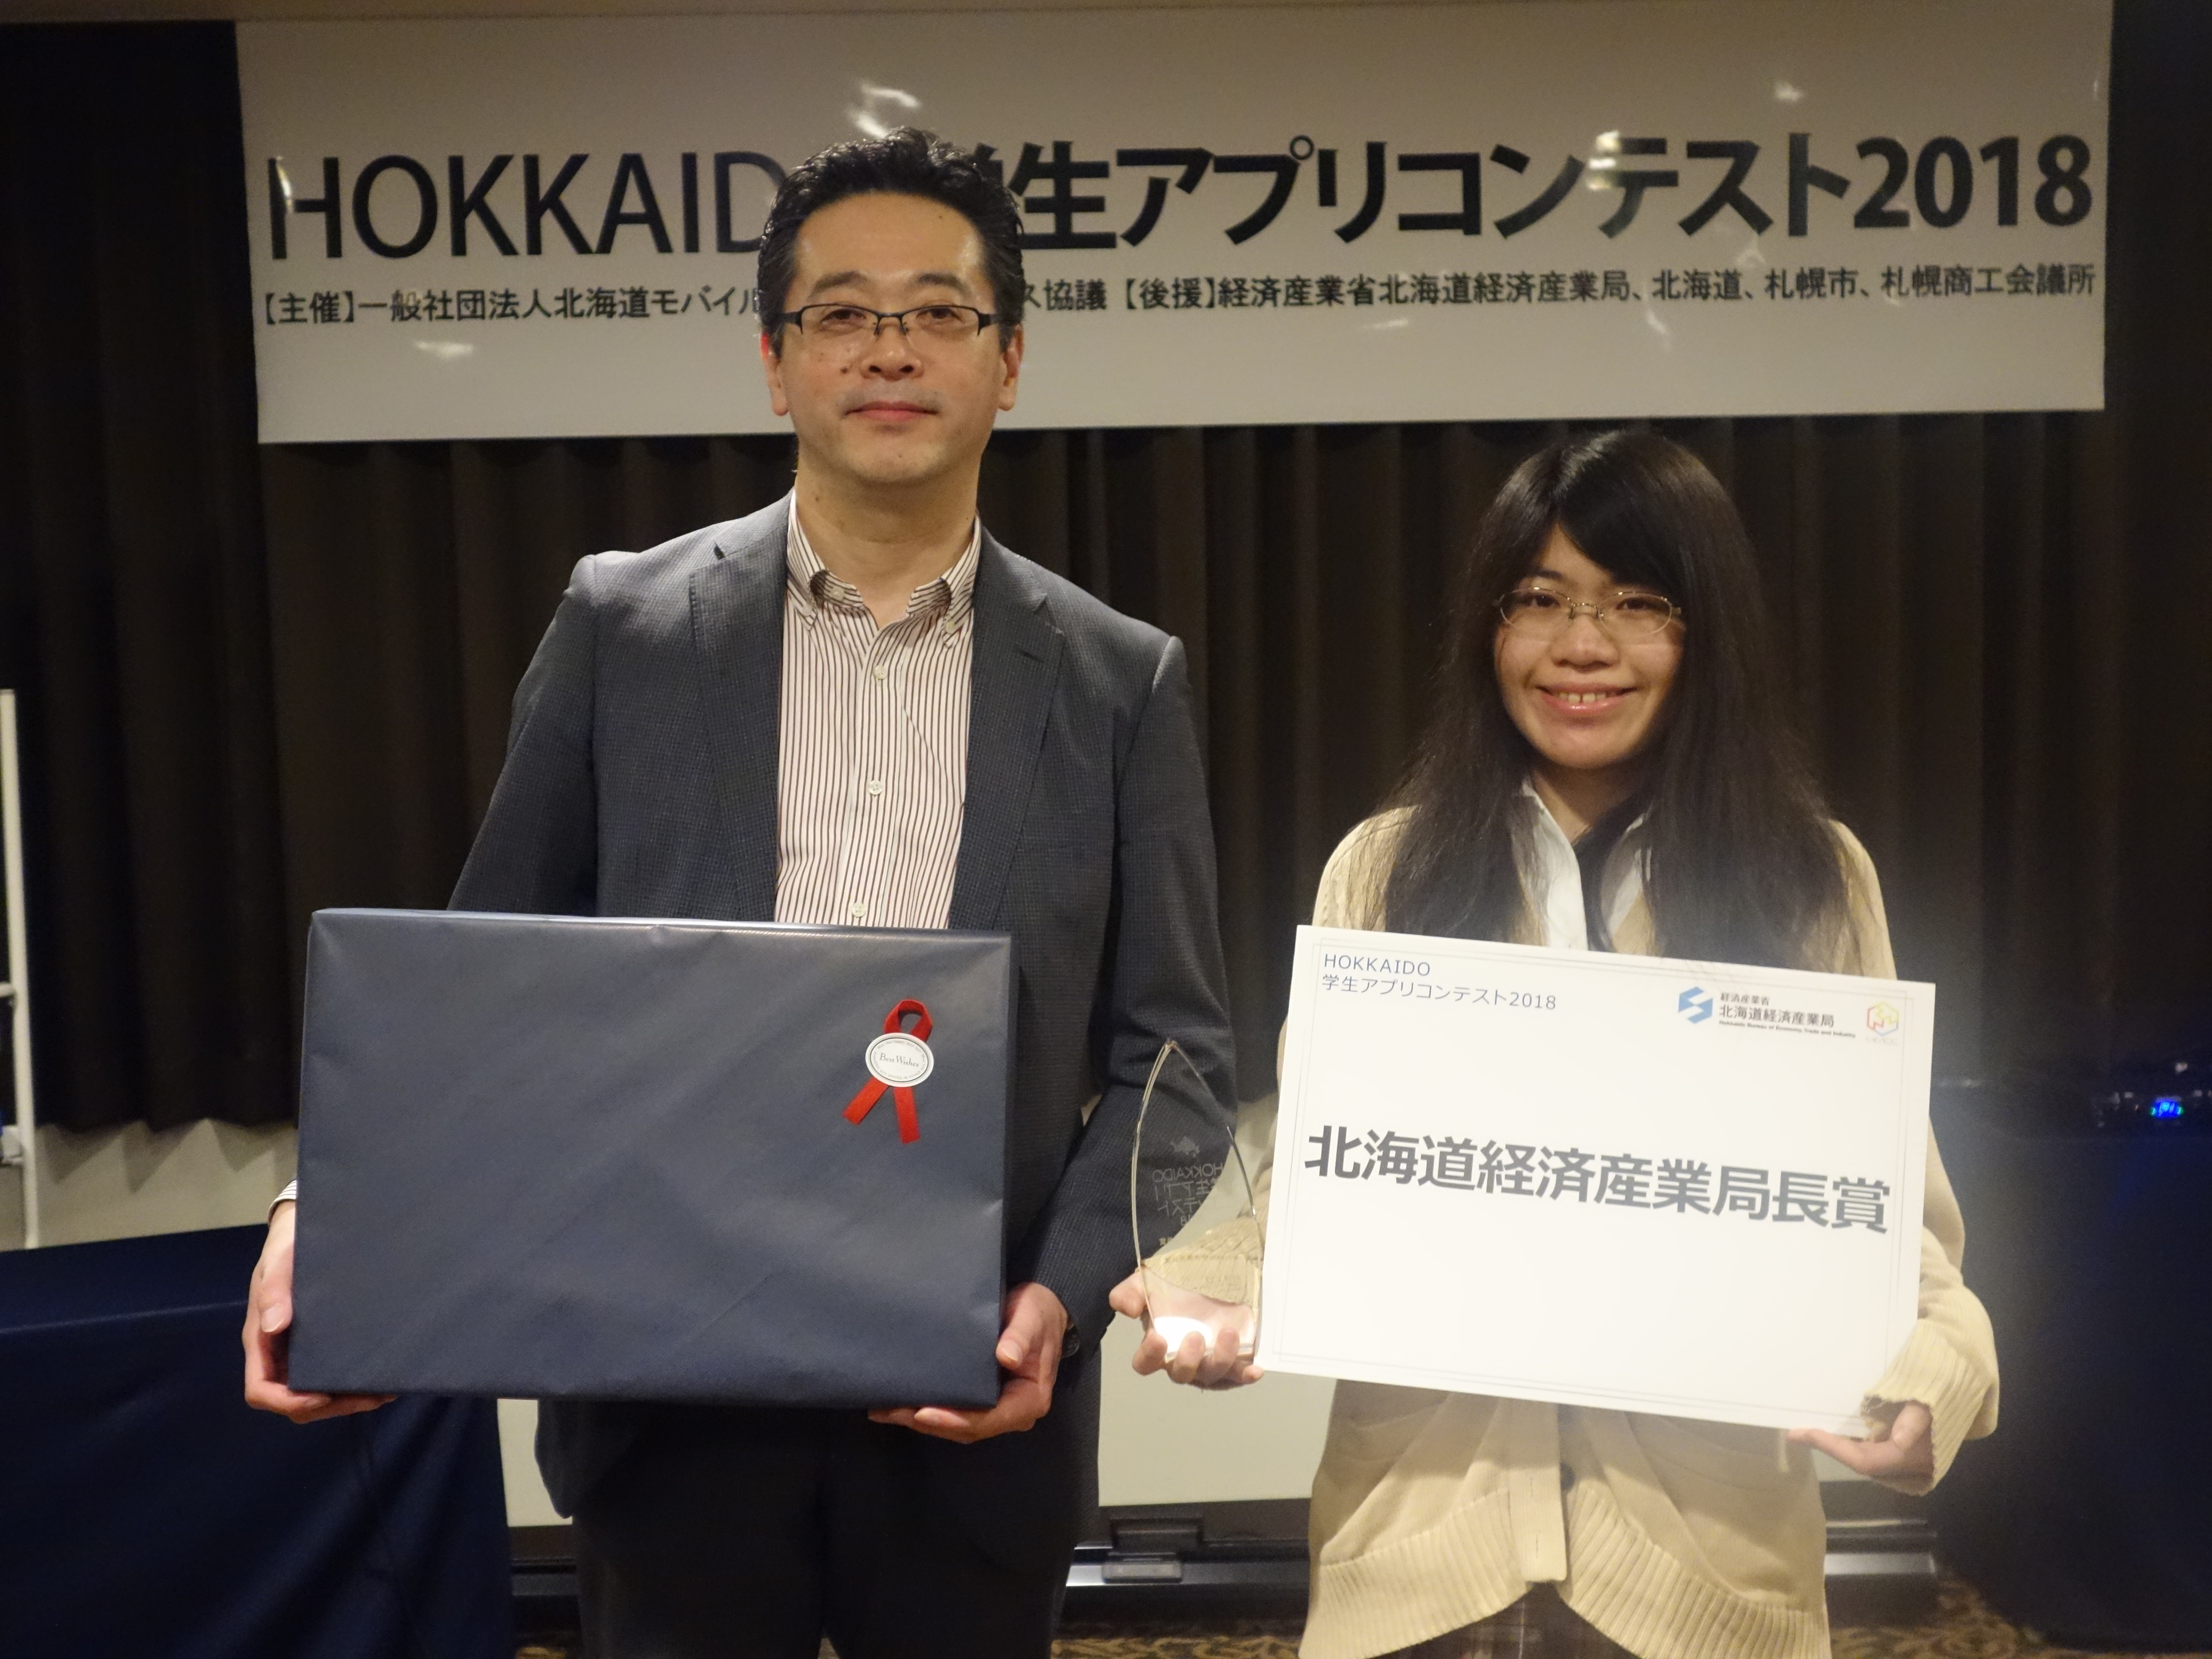 HOKKAIDO学生アプリコンテスト2018 結果発表